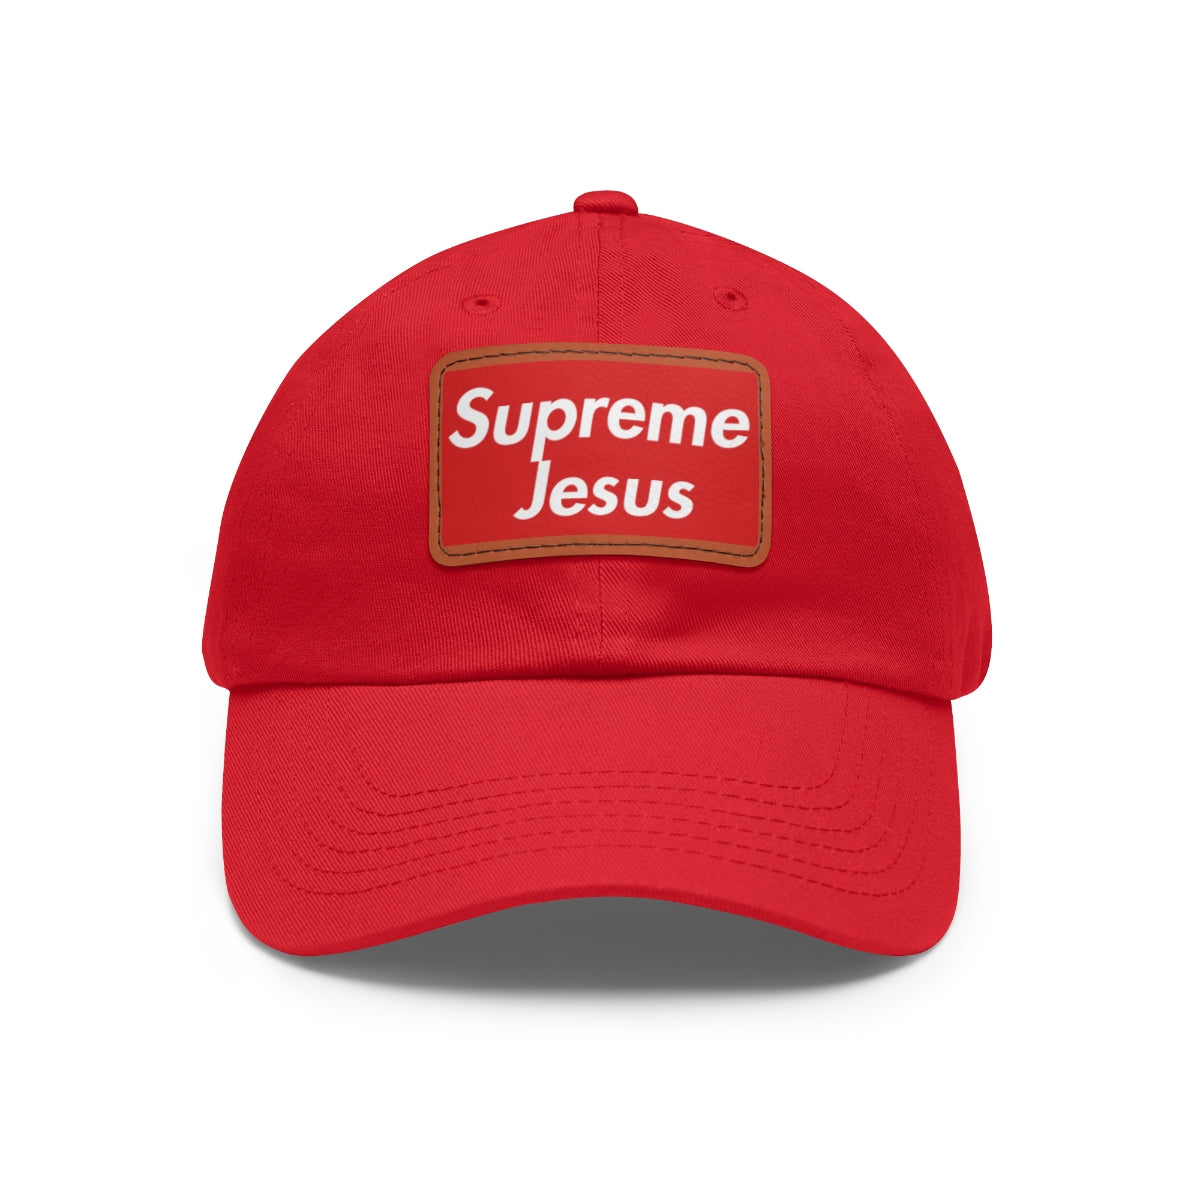 Supreme Jesus unisex hat